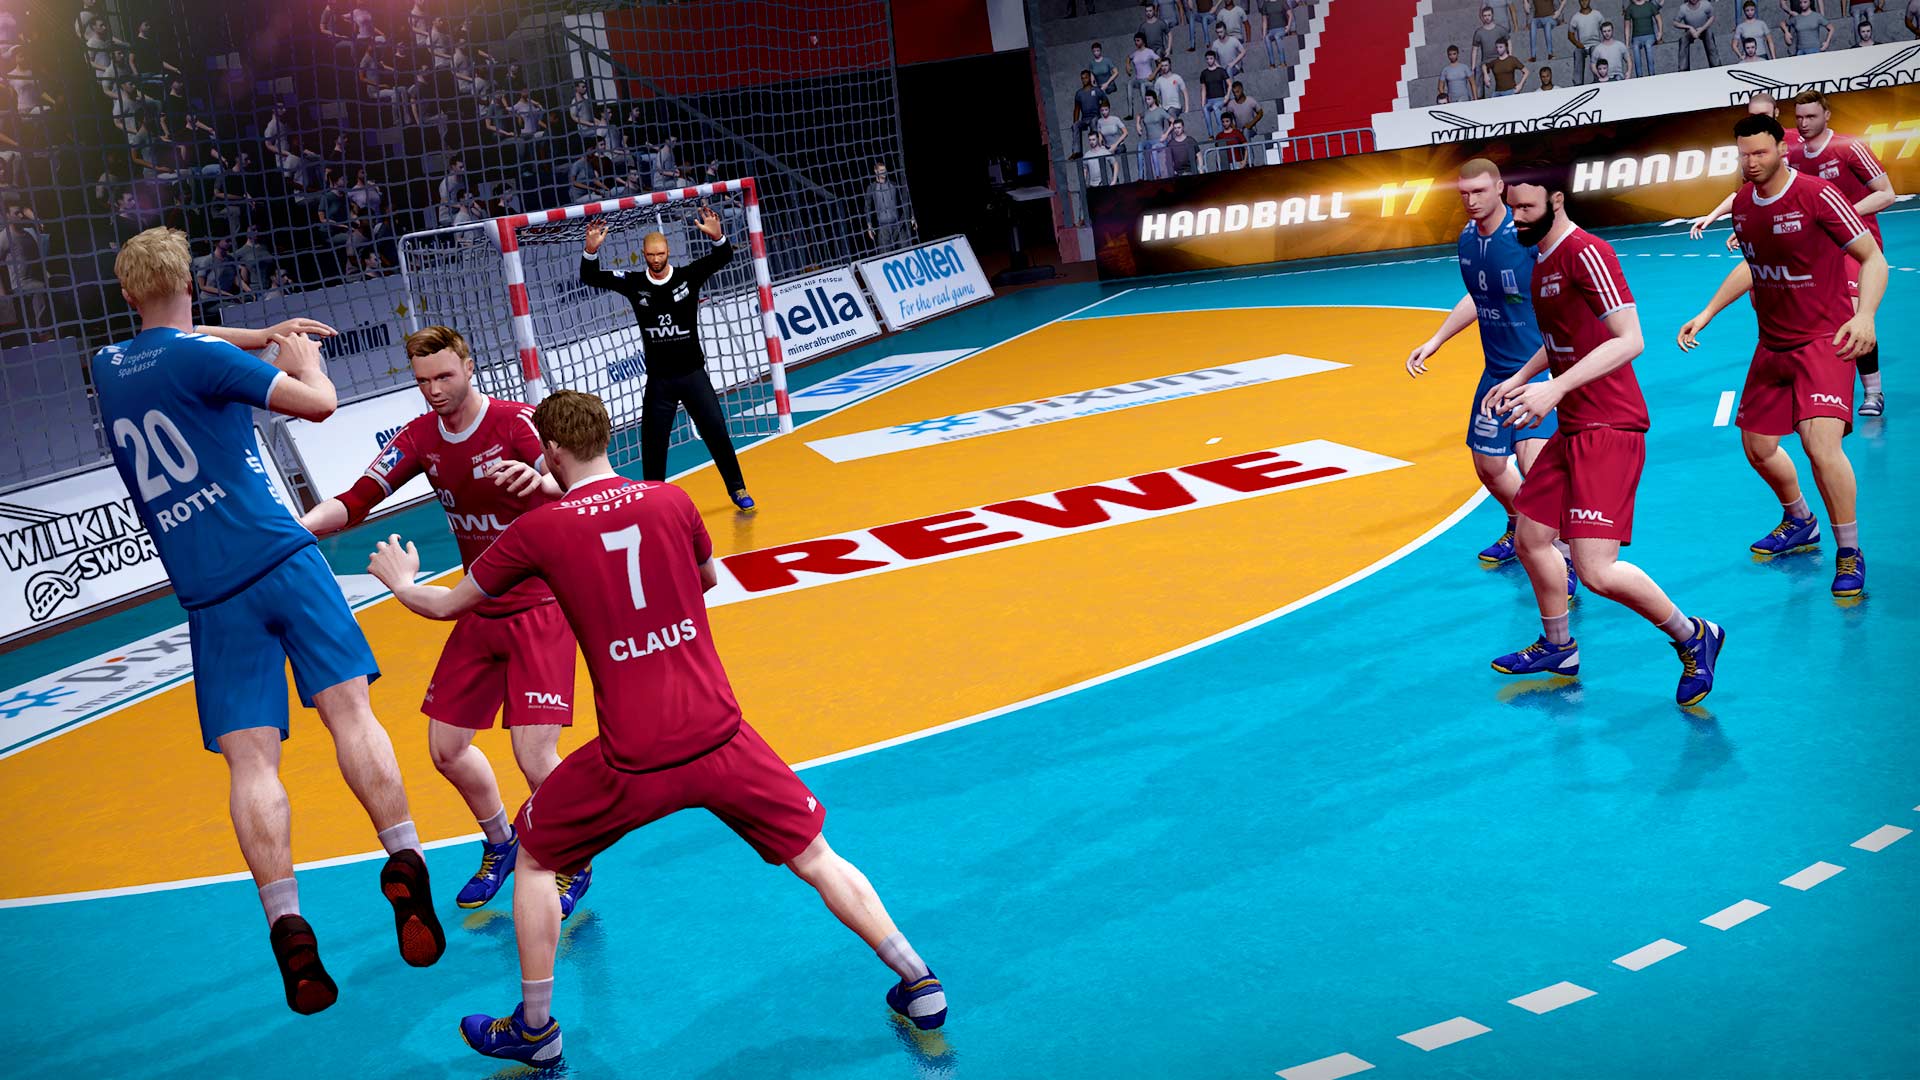 Handball 17 - screenshot 2